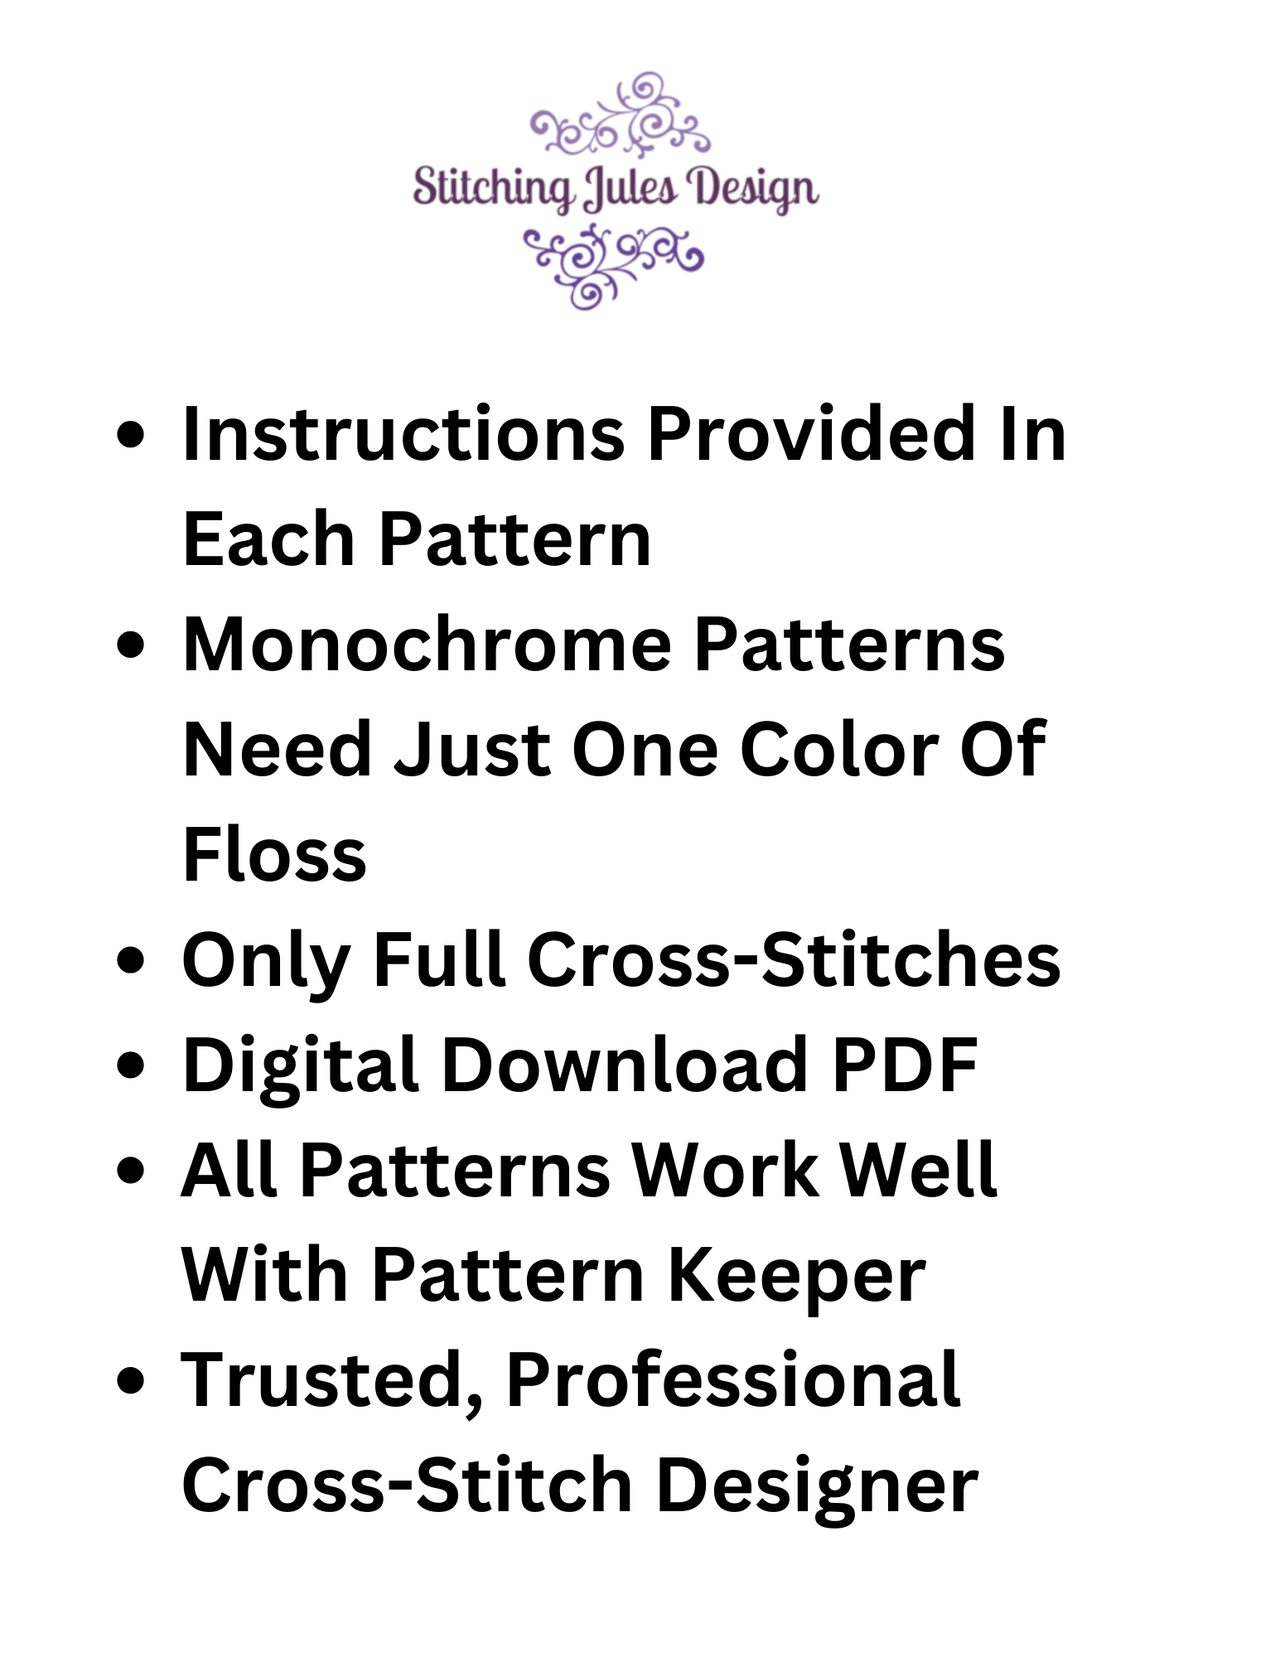 Stitching Jules Design Cross Stitch Pattern Round House Monochrome Counted Cross Stitch Pattern | Instant Download PDF